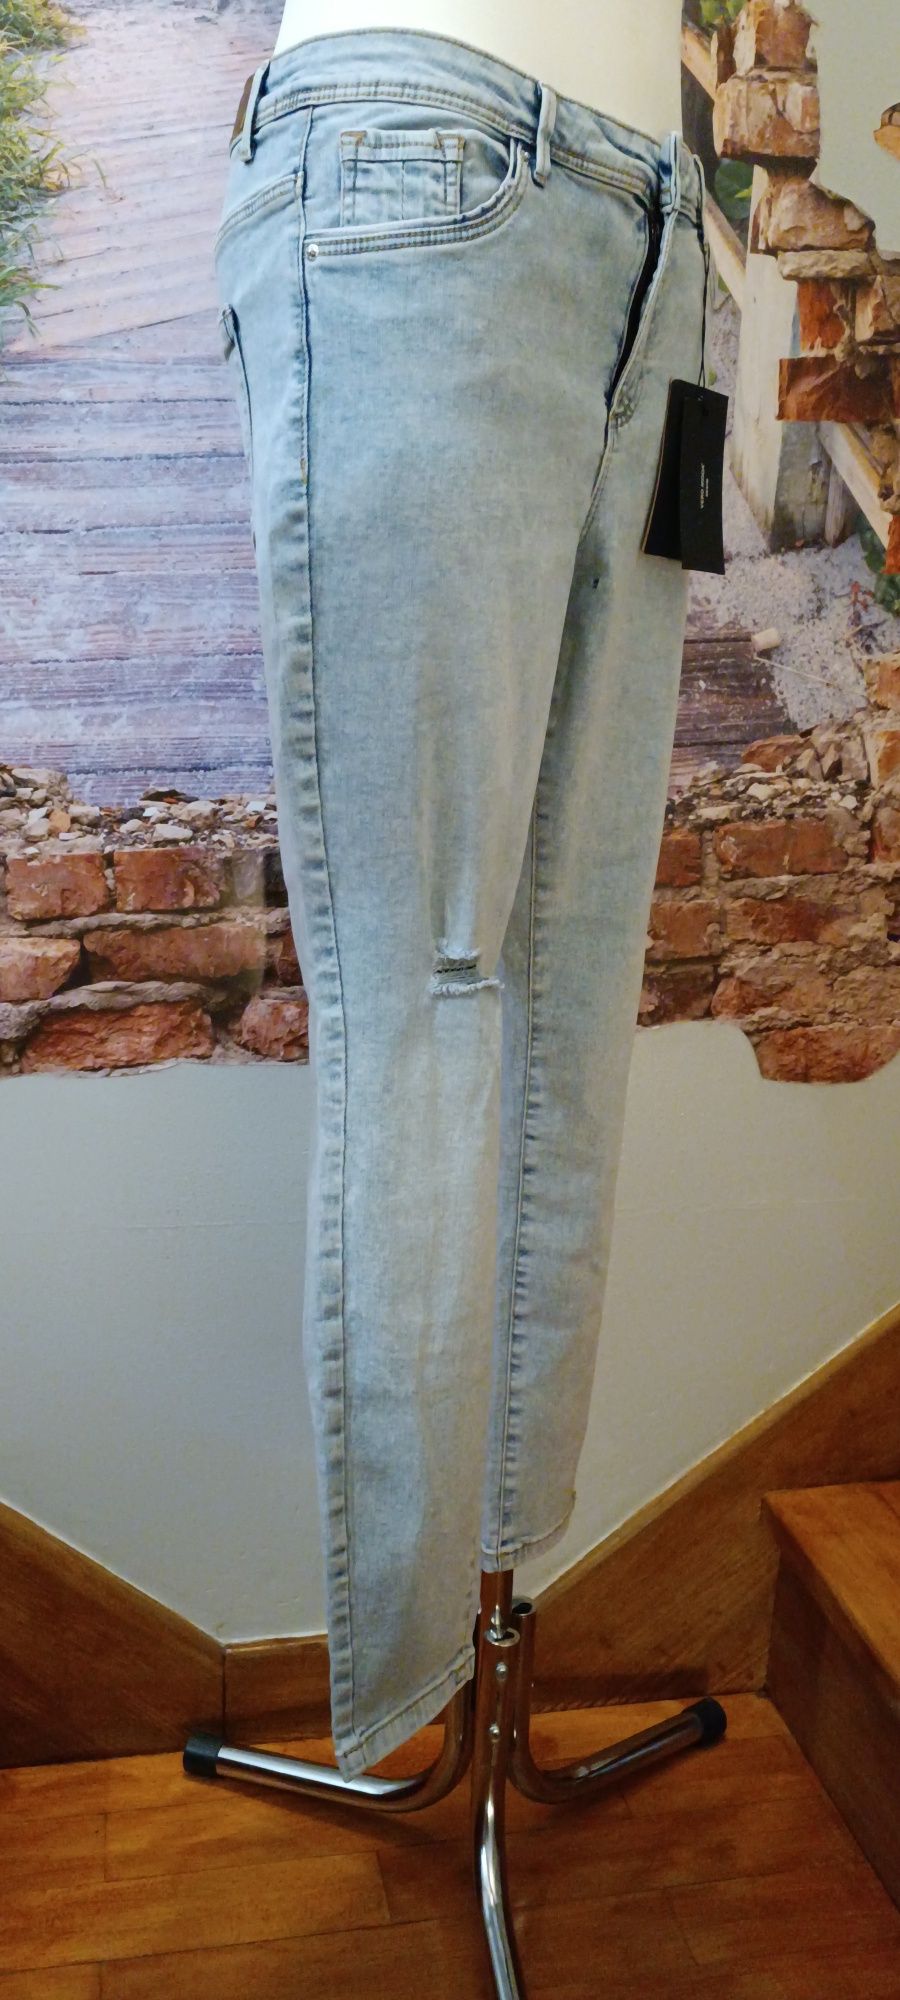 VERO MODA Spodnie jasne jeans damskie r. L z Metką